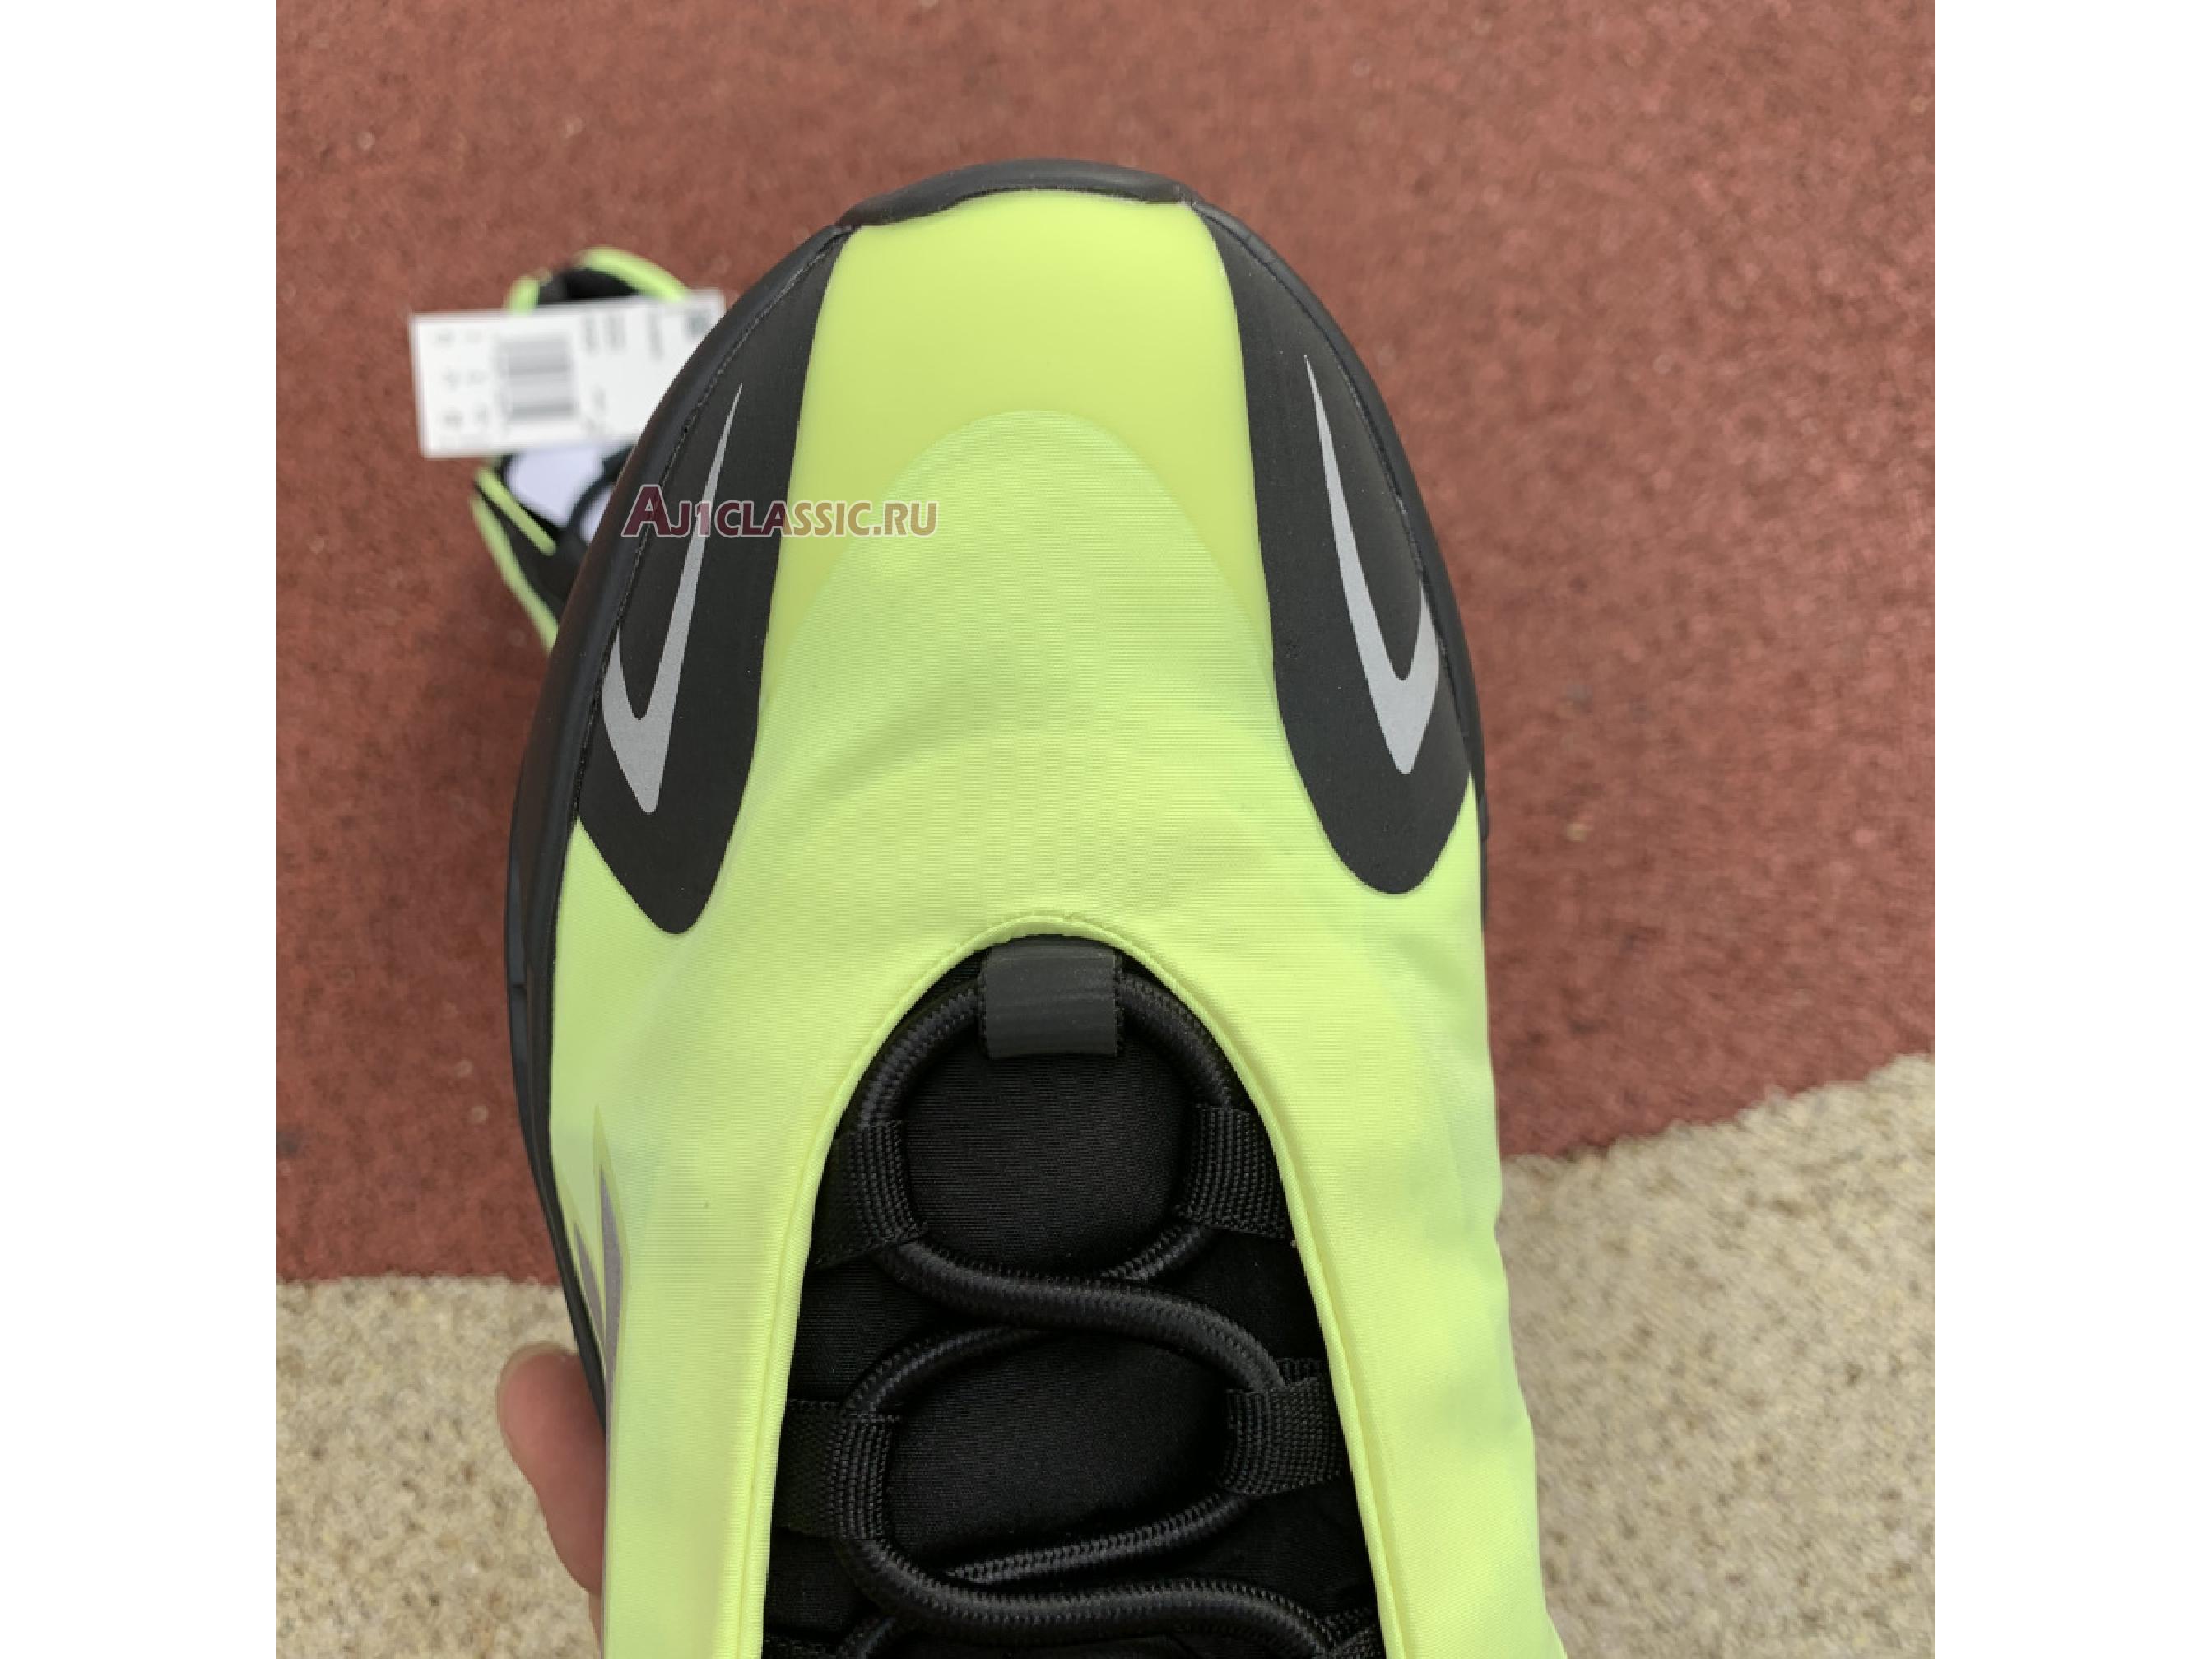 Adidas Yeezy Boost 700 MNVN "Phosphor" FY3727